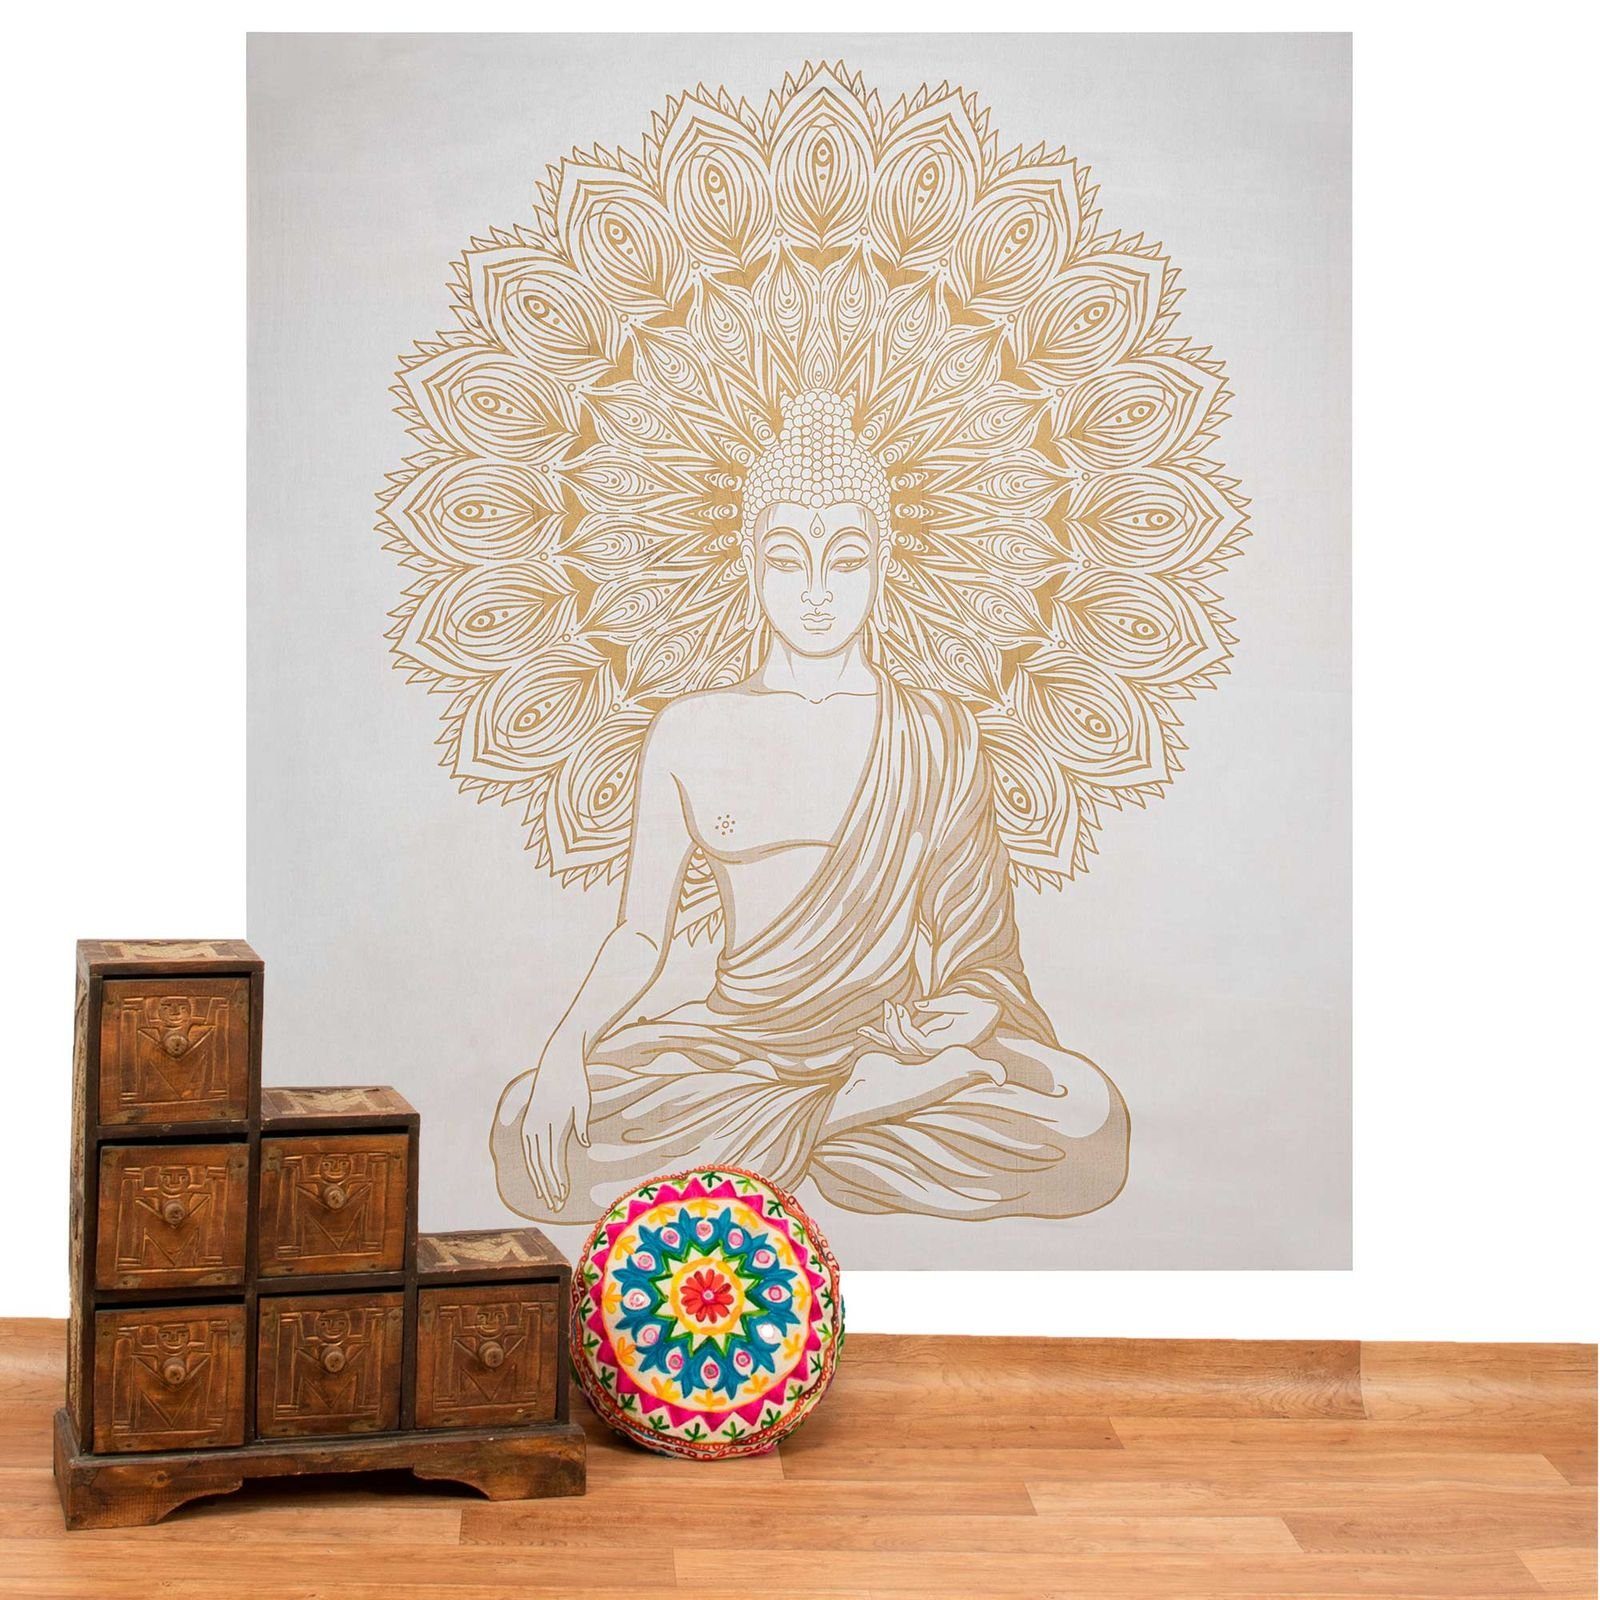 Wandteppich Tagesdecke Wandbehang Deko Tuch Buddha Meditation Gold ca. 200 x 230cm, KUNST UND MAGIE